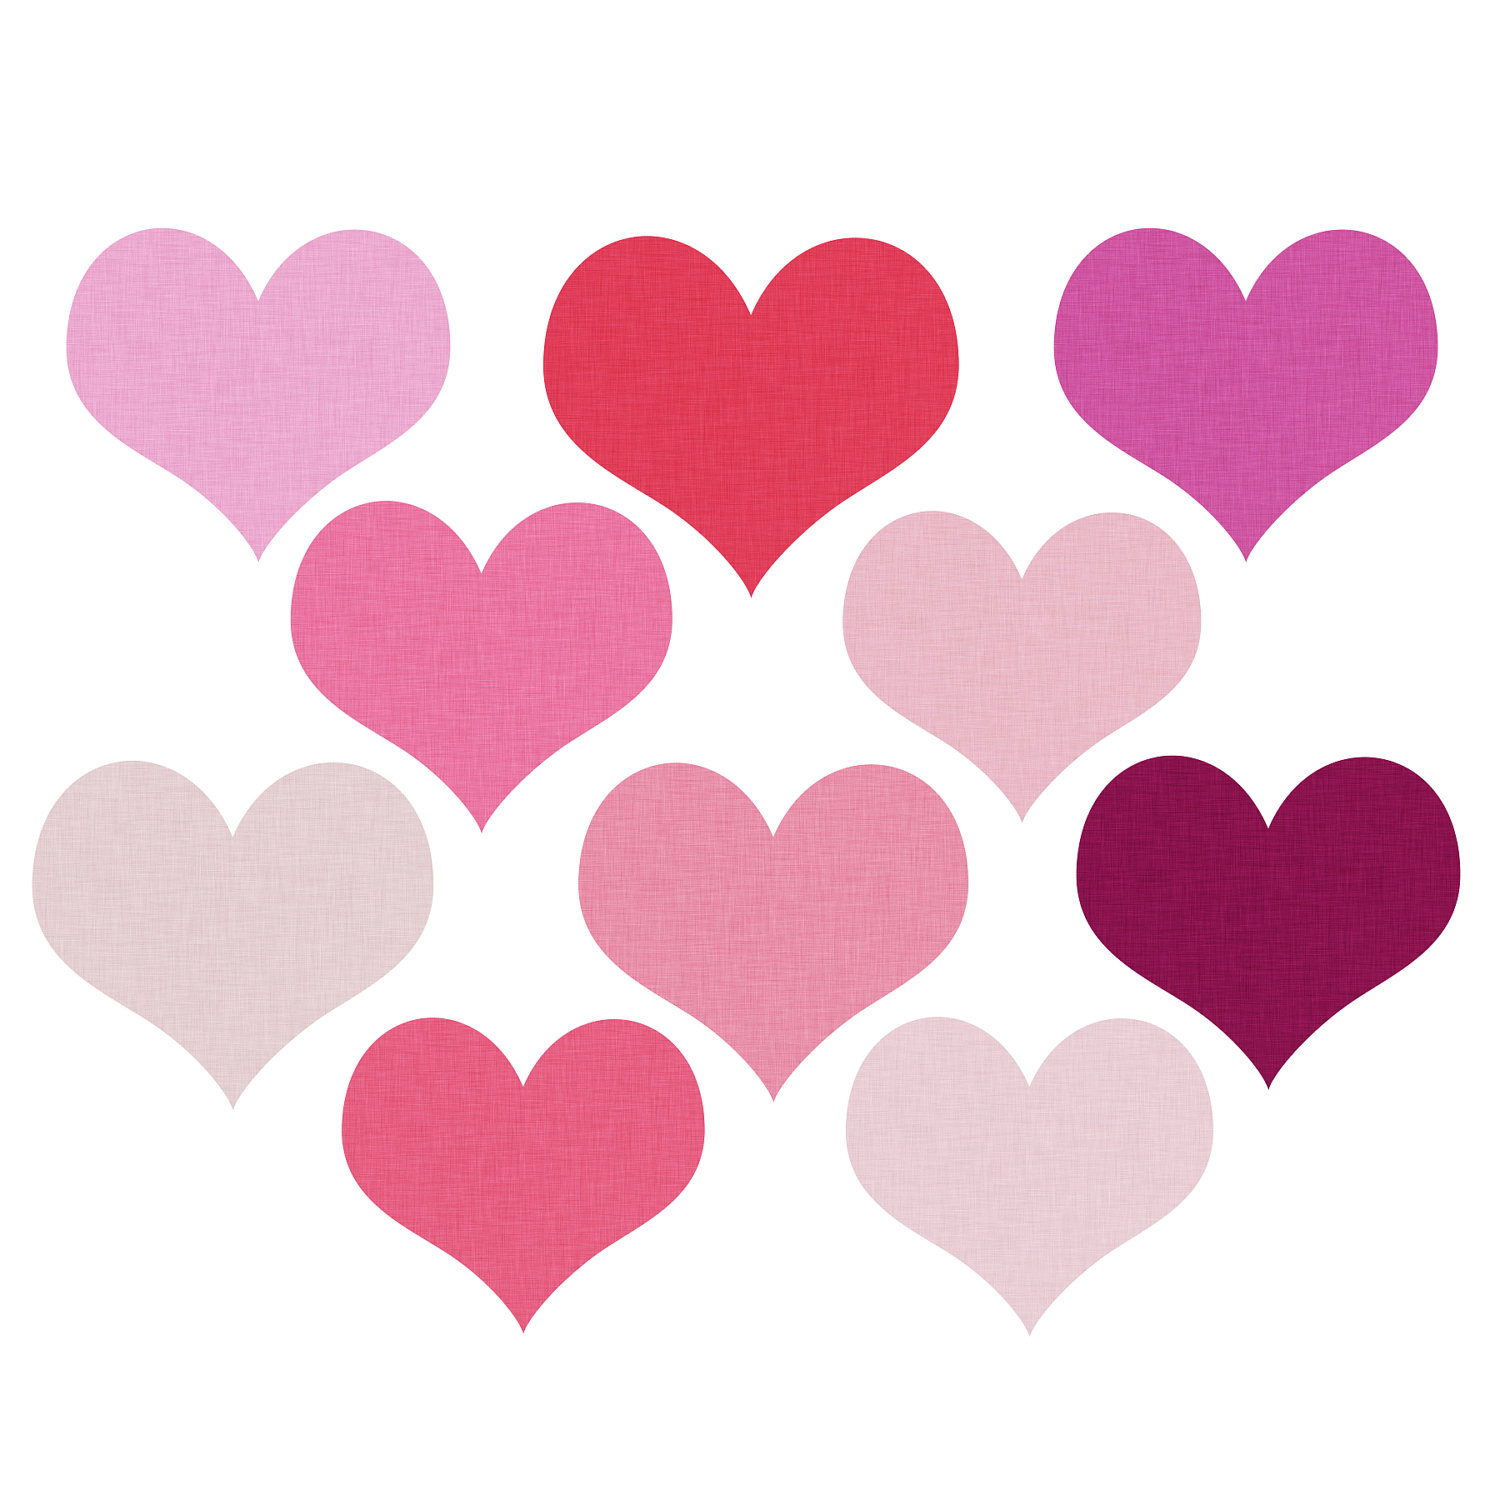 Popular items for clip art love hearts on Etsy